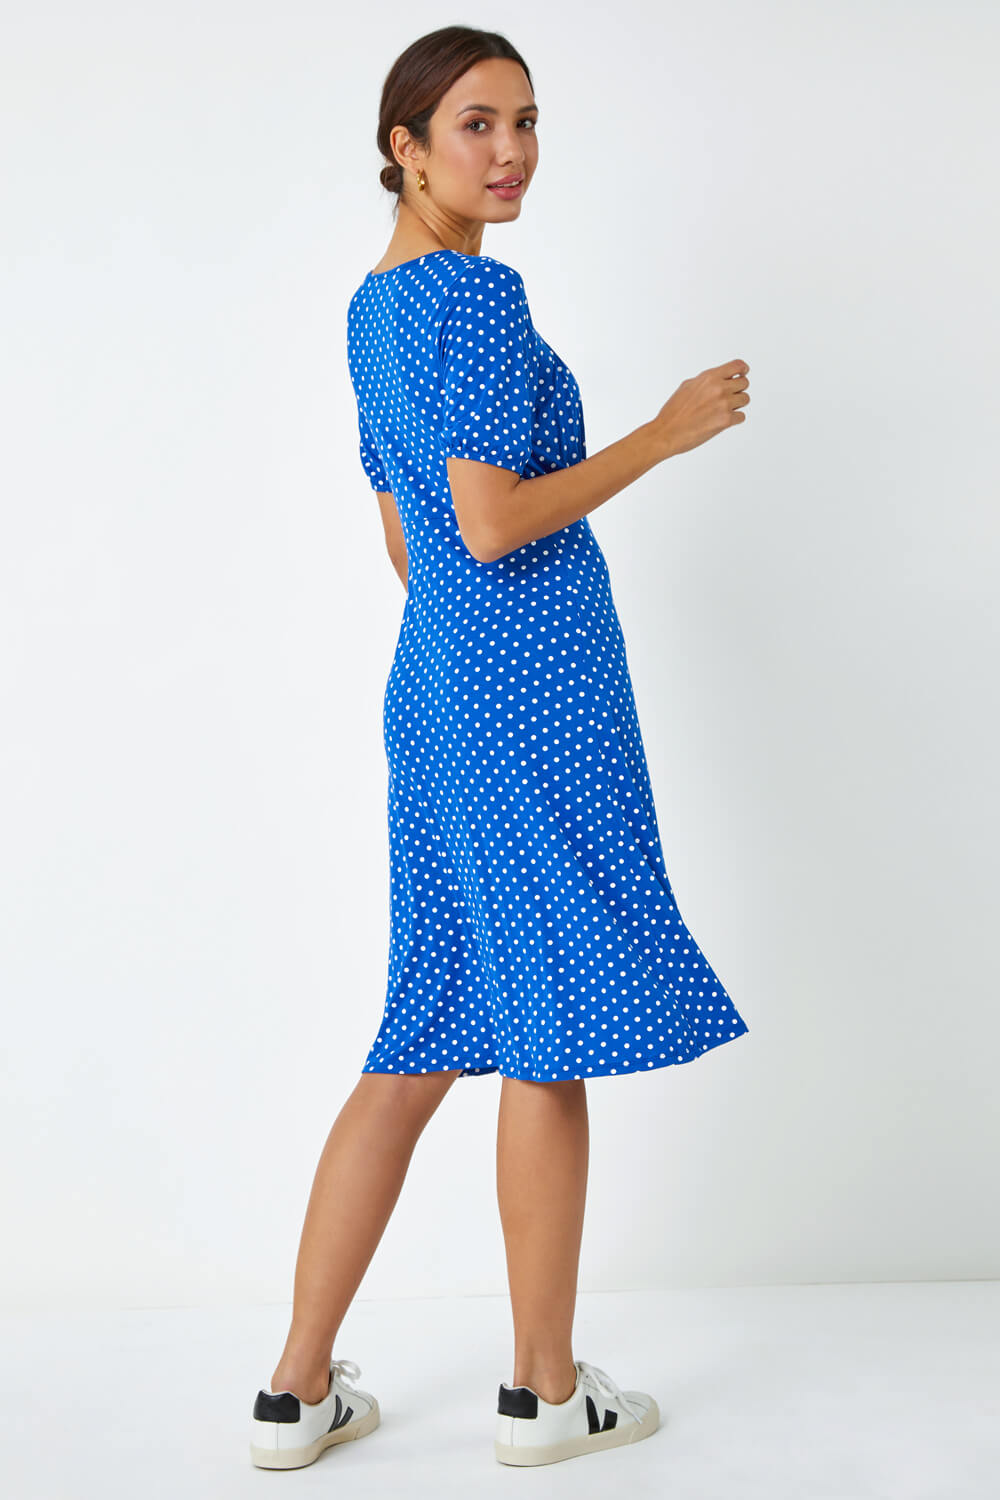 Royal Blue Polka Dot Print Stretch Dress, Image 3 of 5